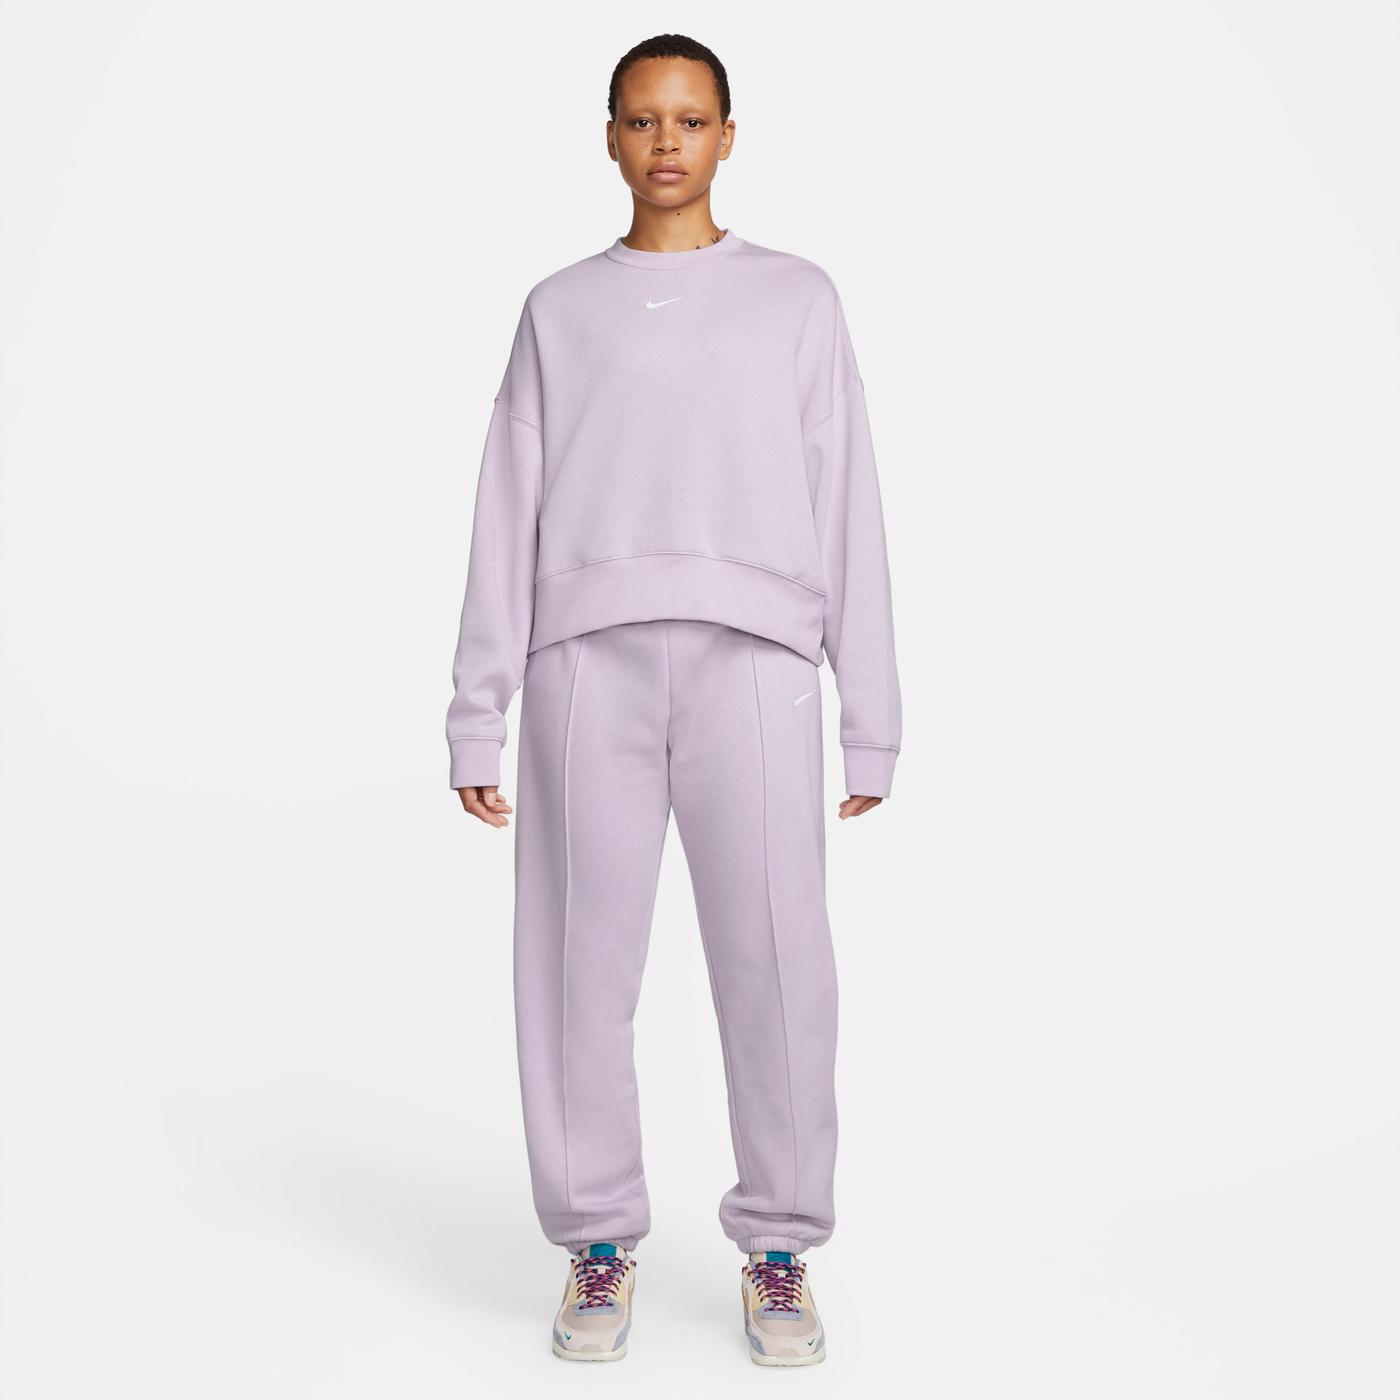 Nike Sportswear Collection Essentials Kadın Mor Sweatshirt